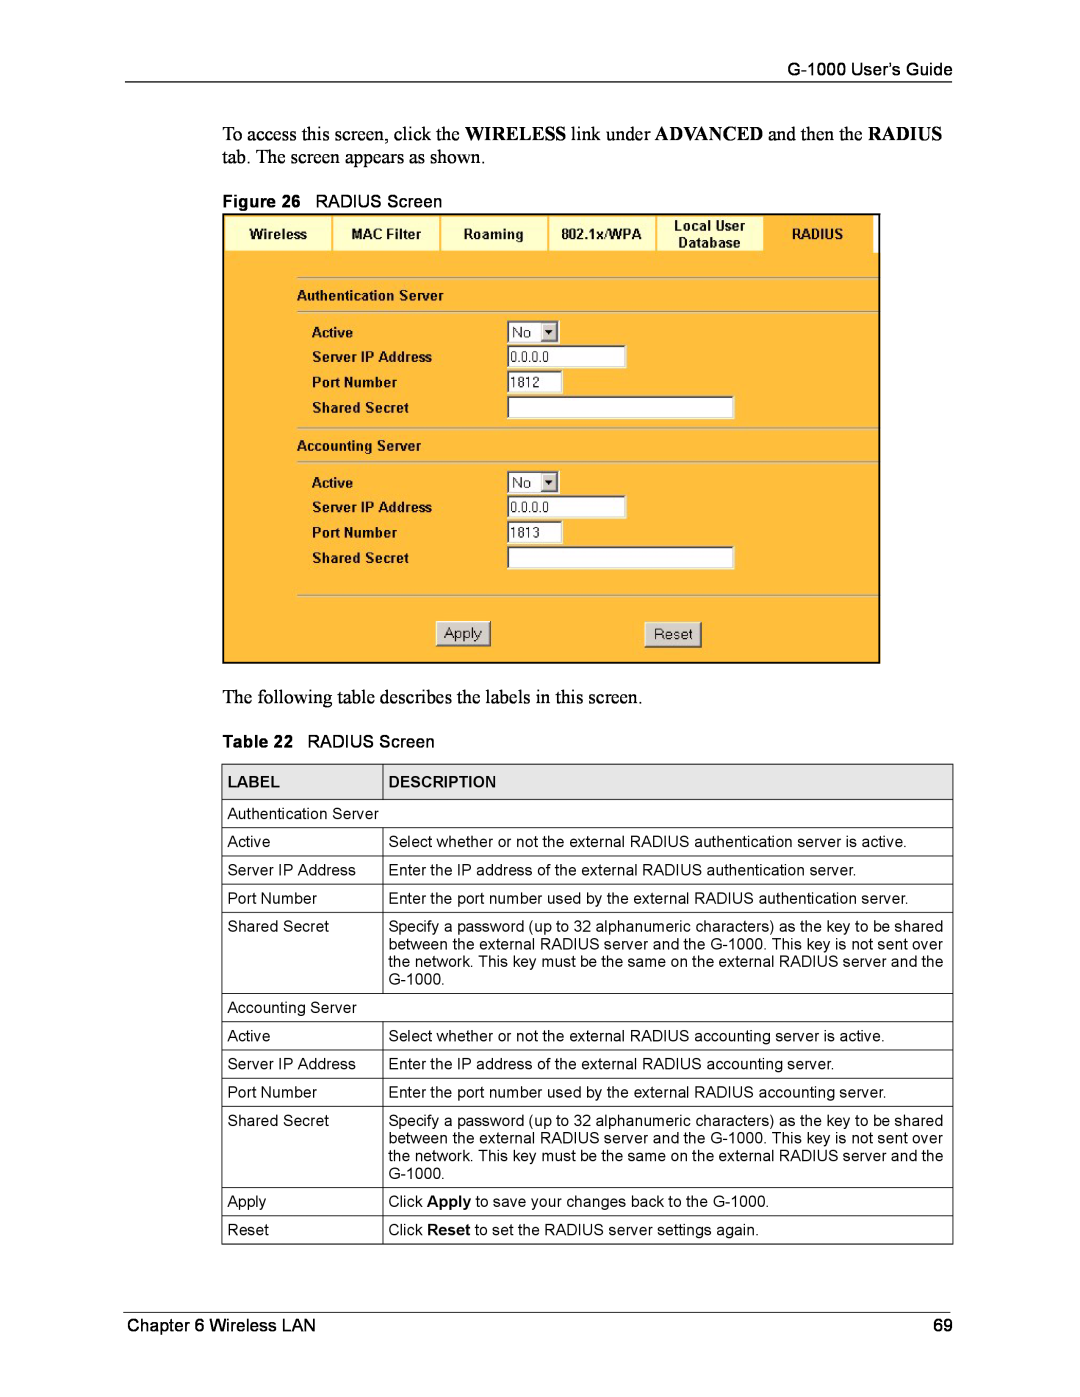 ZyXEL Communications manual G-1000 User’s Guide, RADIUS Screen, Wireless LAN, Label, Description 